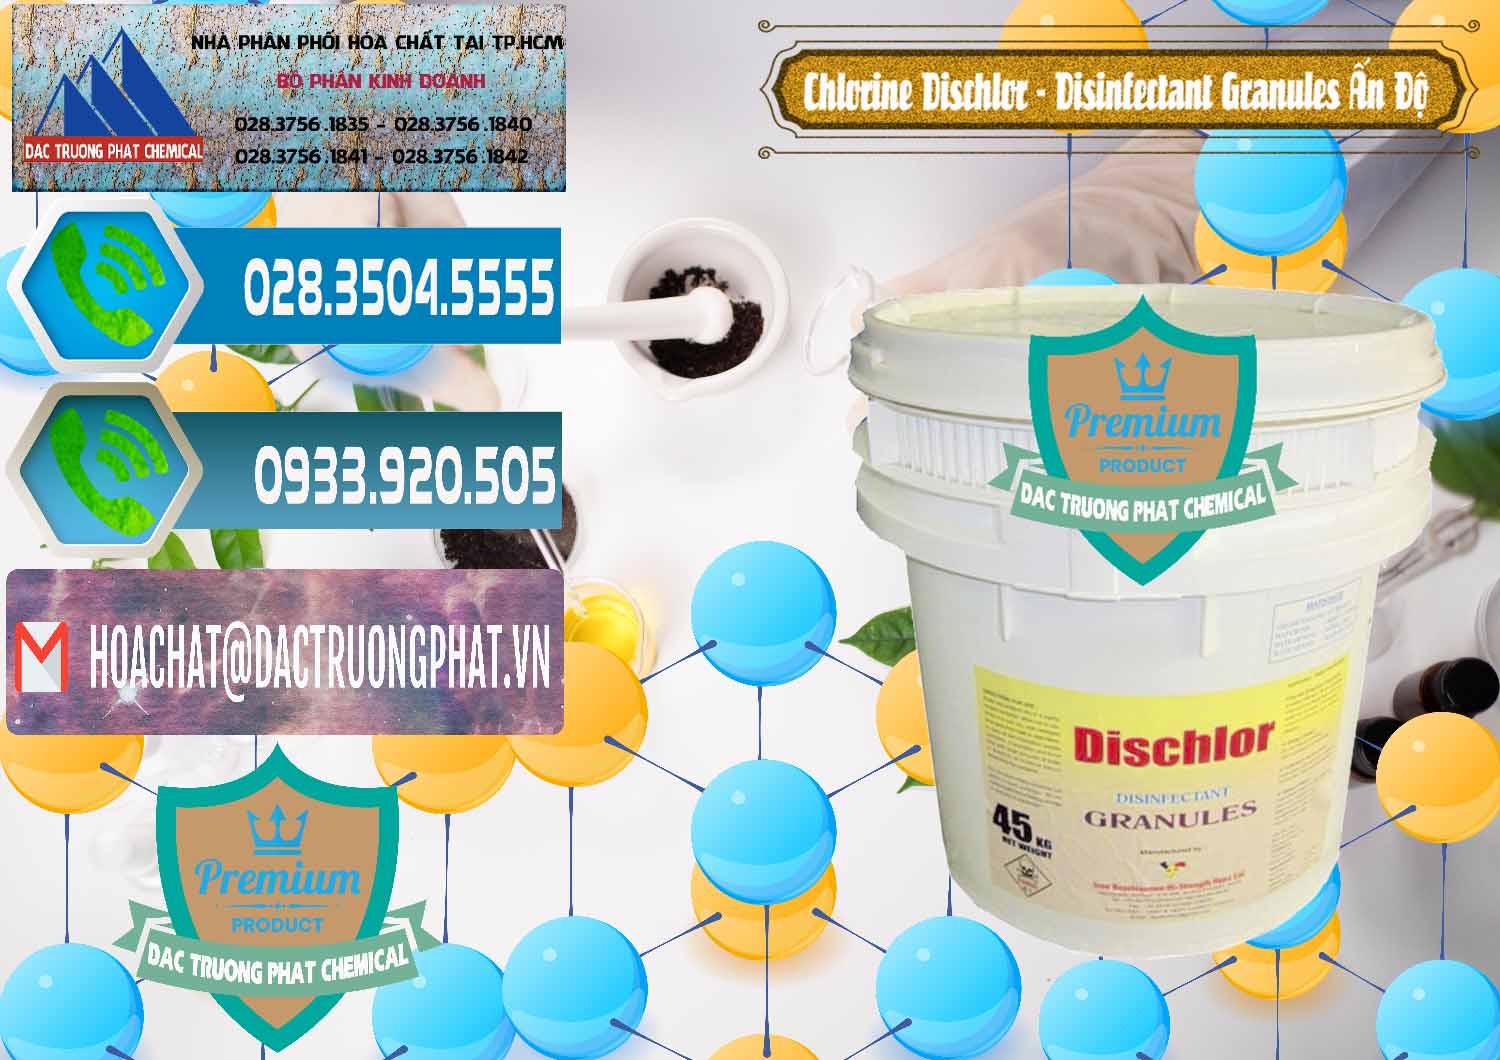 Cty chuyên bán _ phân phối Chlorine – Clorin 70% Dischlor - Disinfectant Granules Ấn Độ India - 0248 - Nơi chuyên bán & phân phối hóa chất tại TP.HCM - congtyhoachat.net